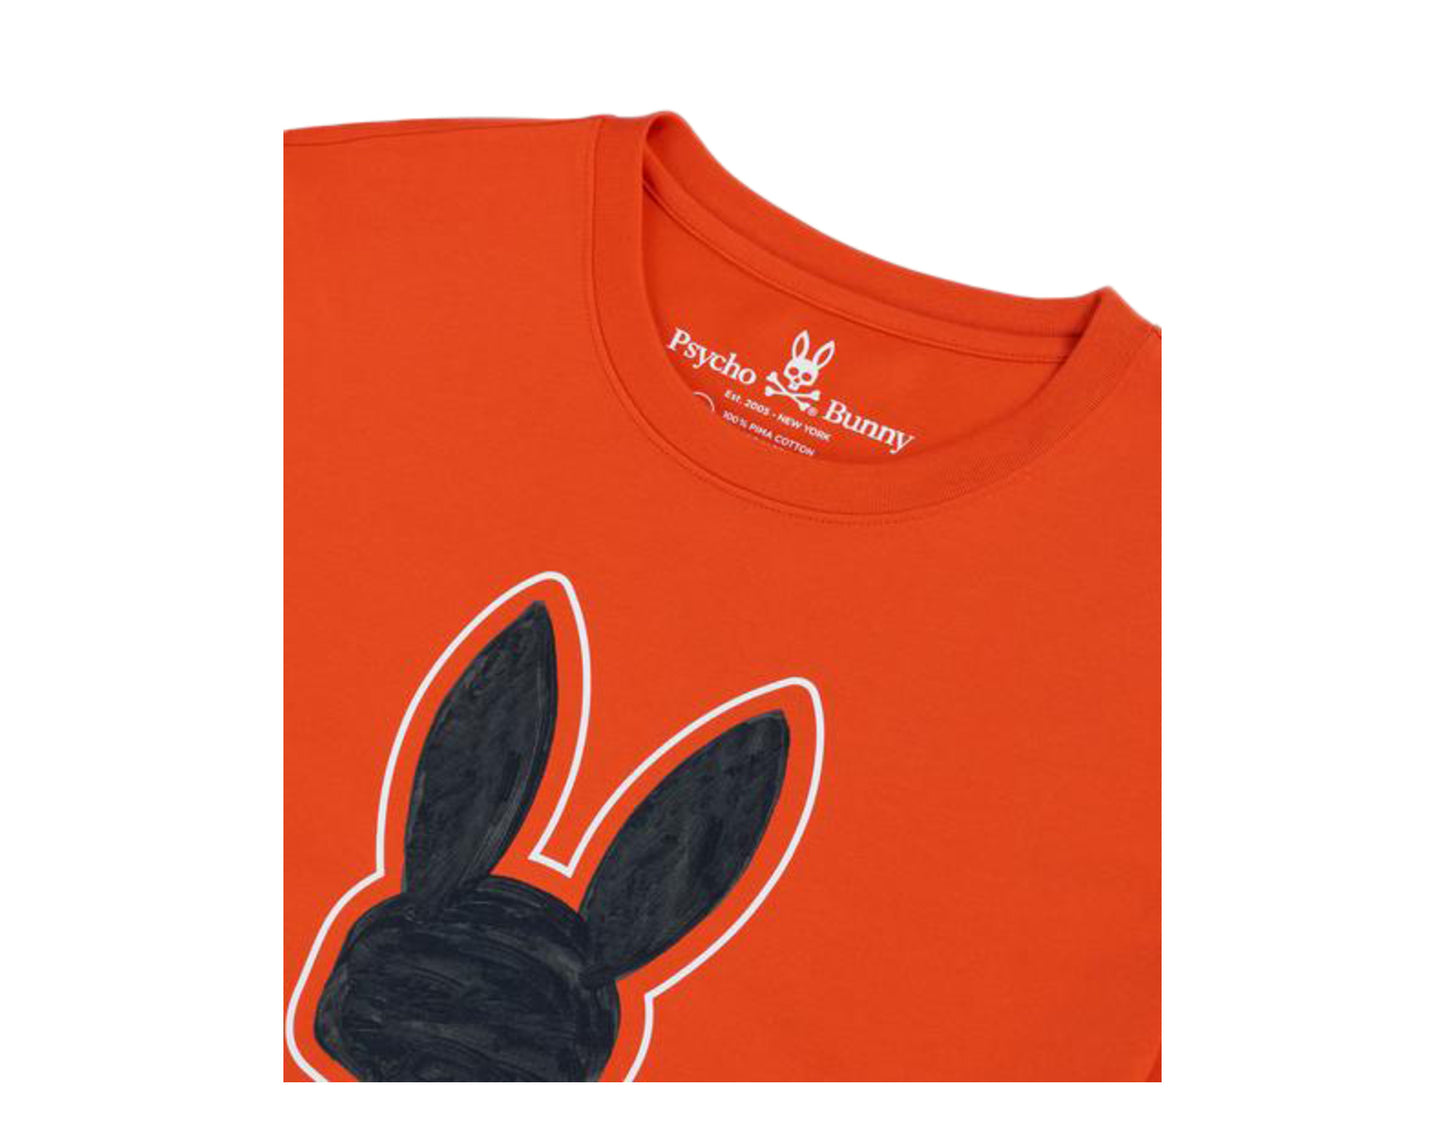 Psycho Bunny Kendal Graphic Pimento/Navy Men's Tee Shirt B6U998L1PC-PIM